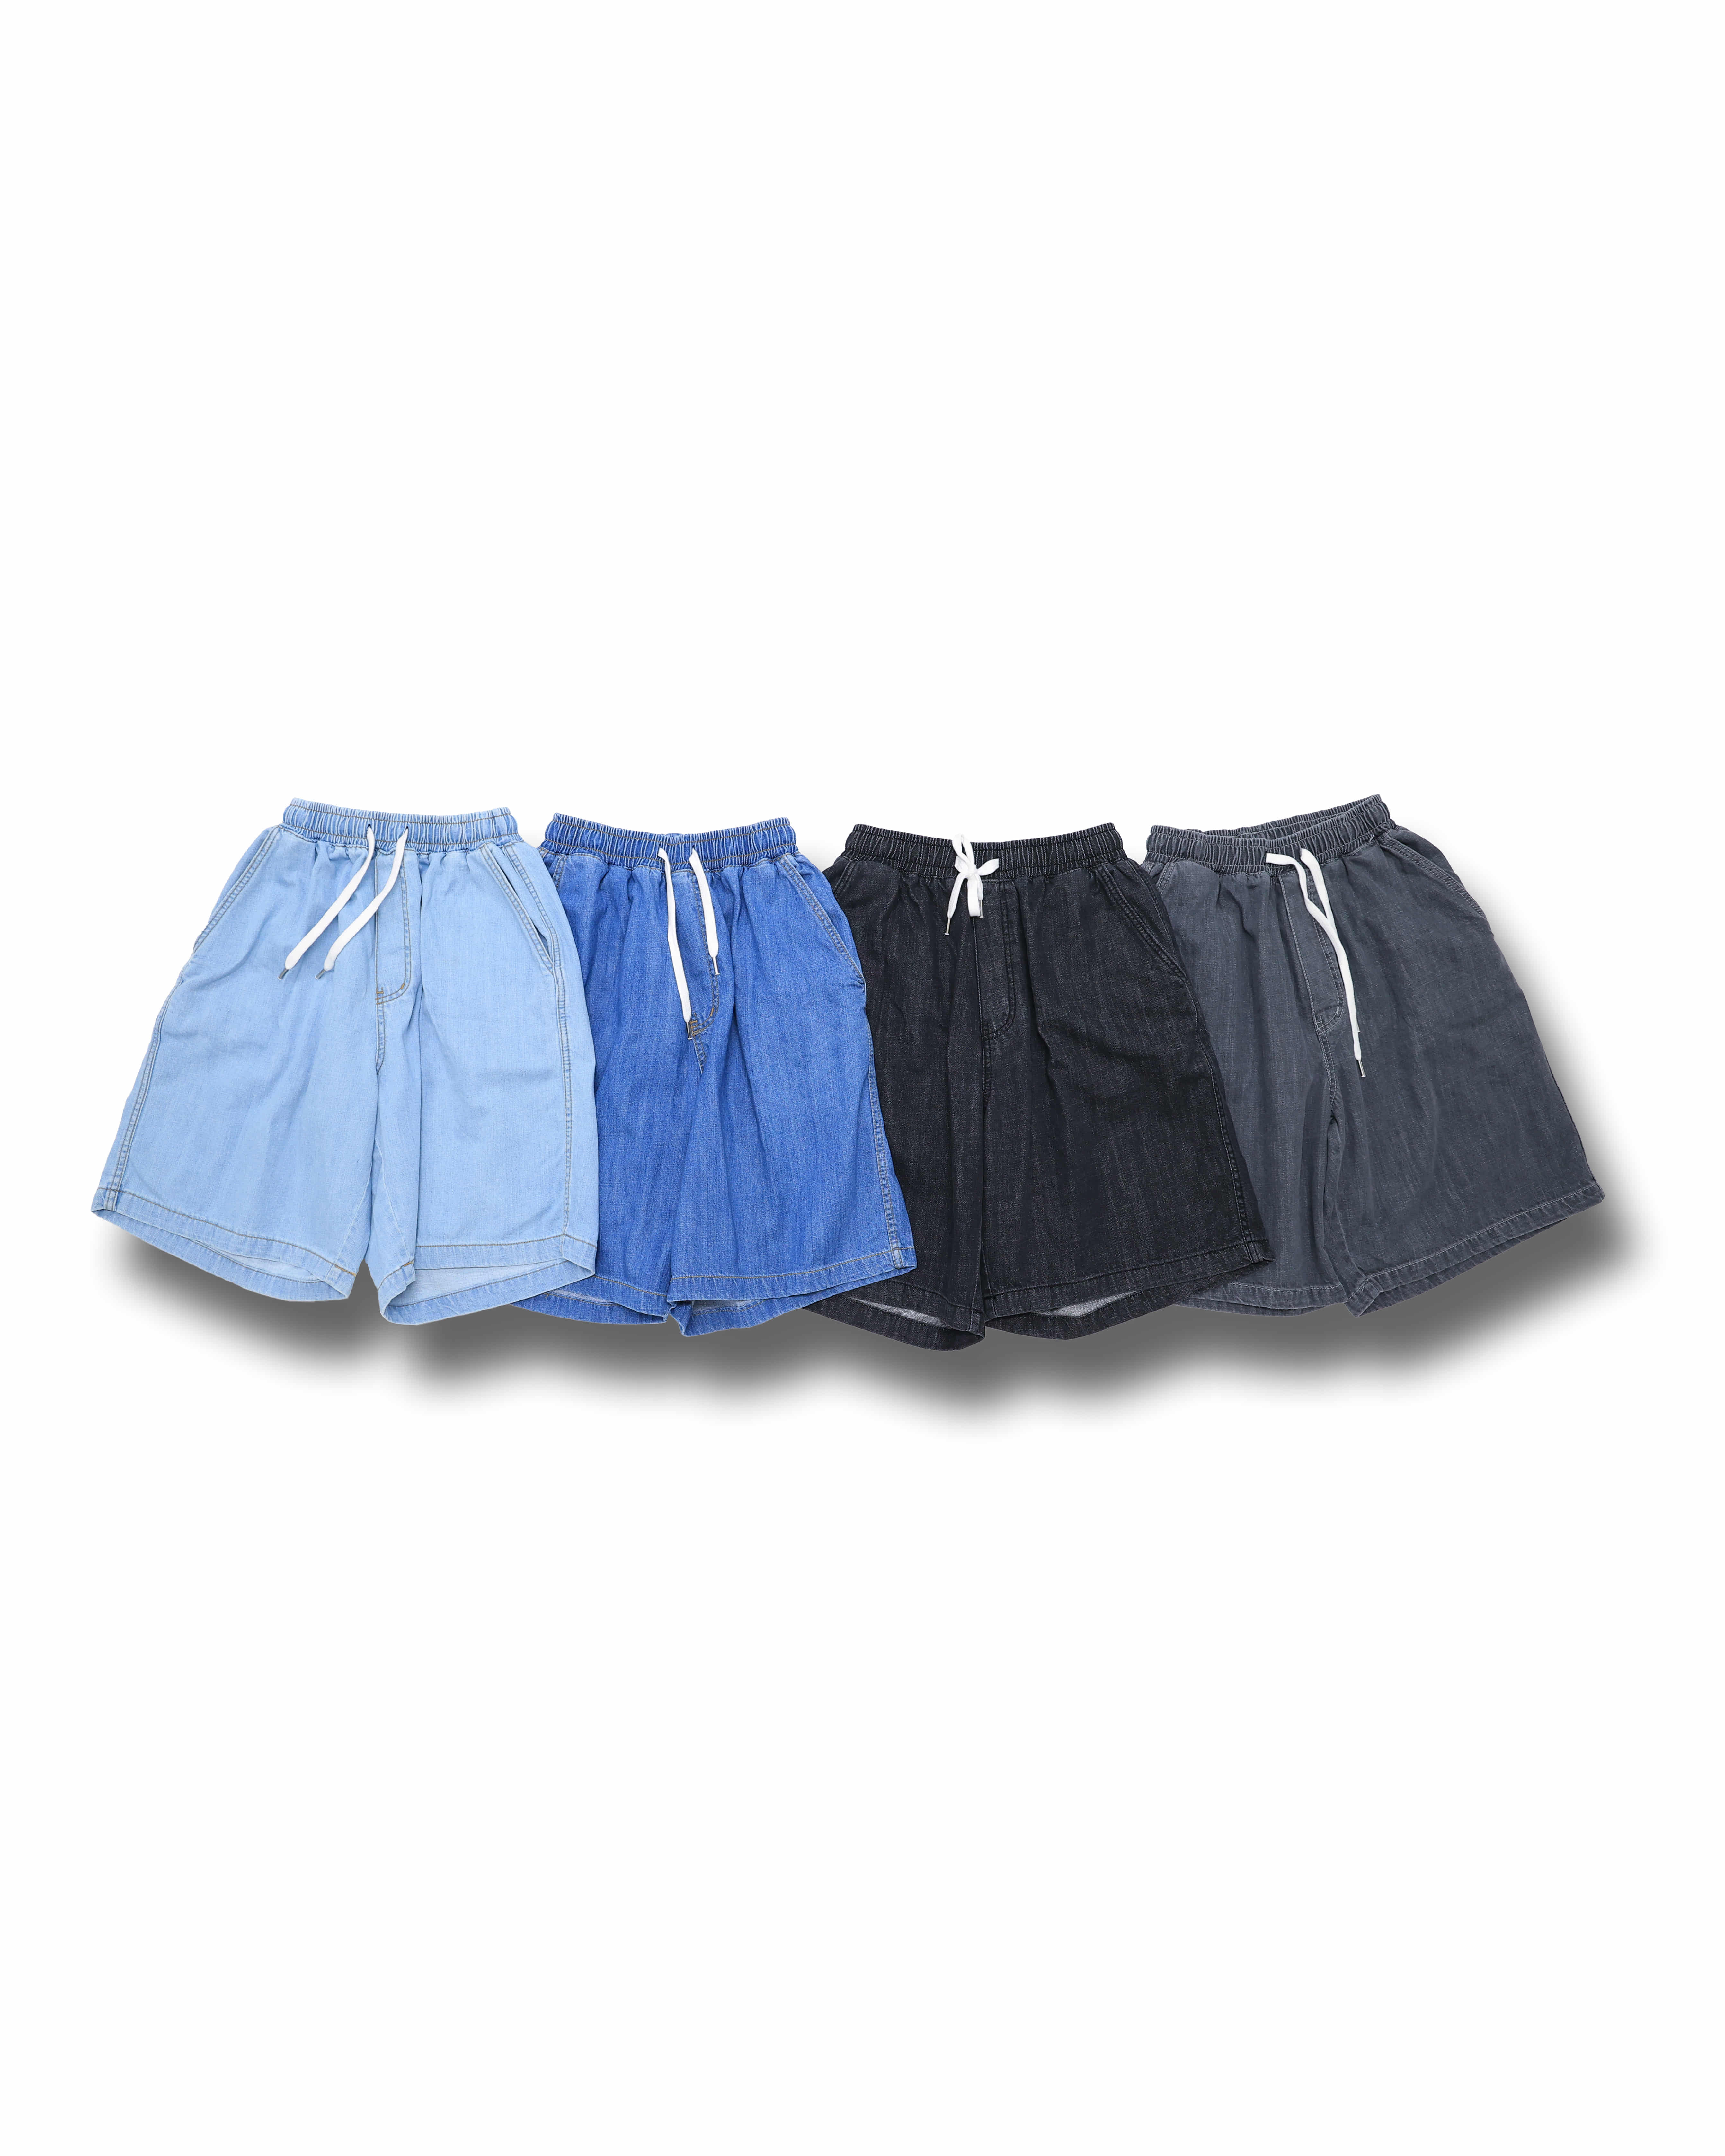 ECO Wide Bermuda Denim Pants (Black/Gray/Middle Blue/Light Blue)